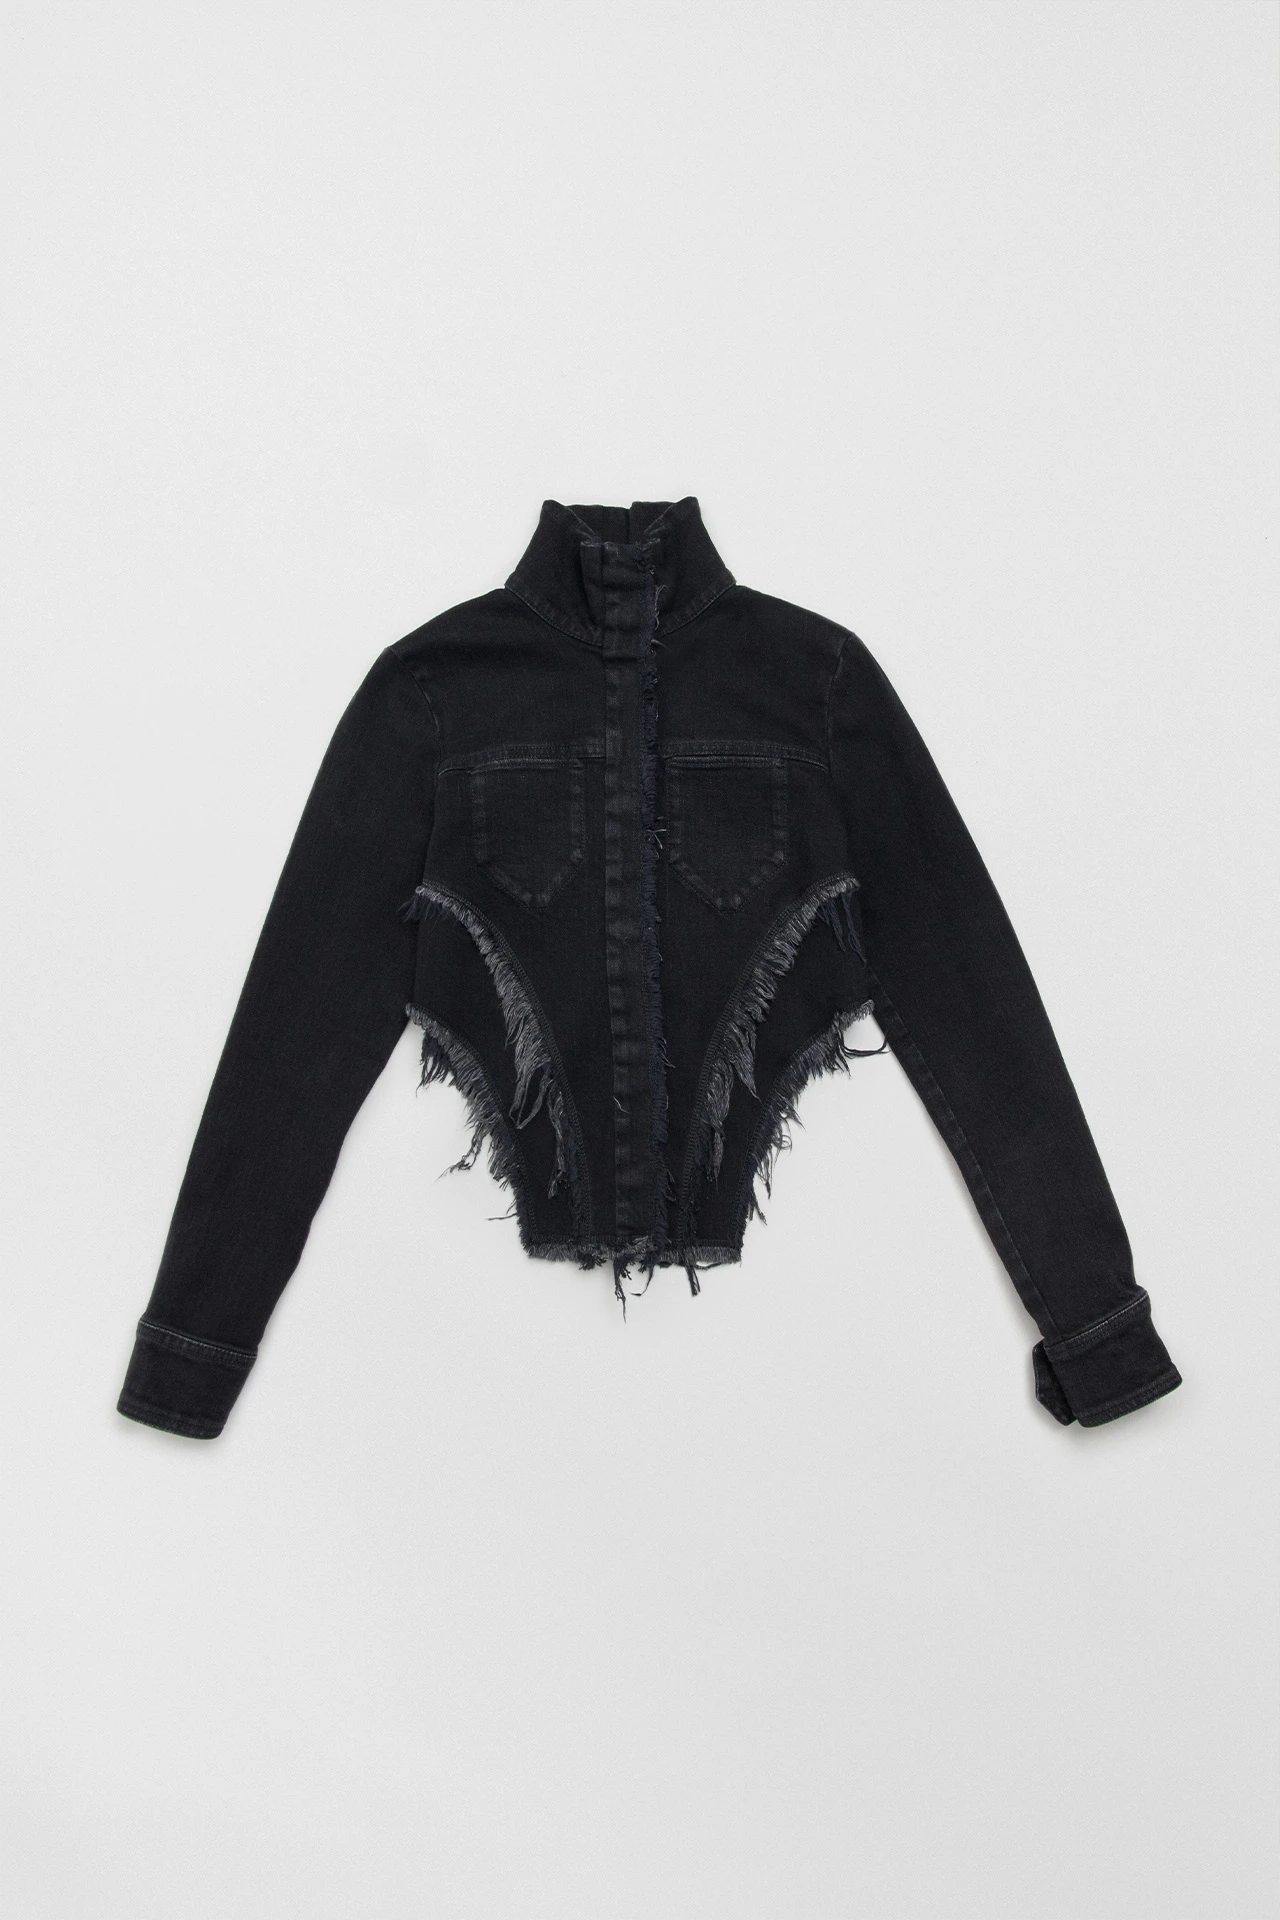 Miista-alia-black-denim-jacket-01